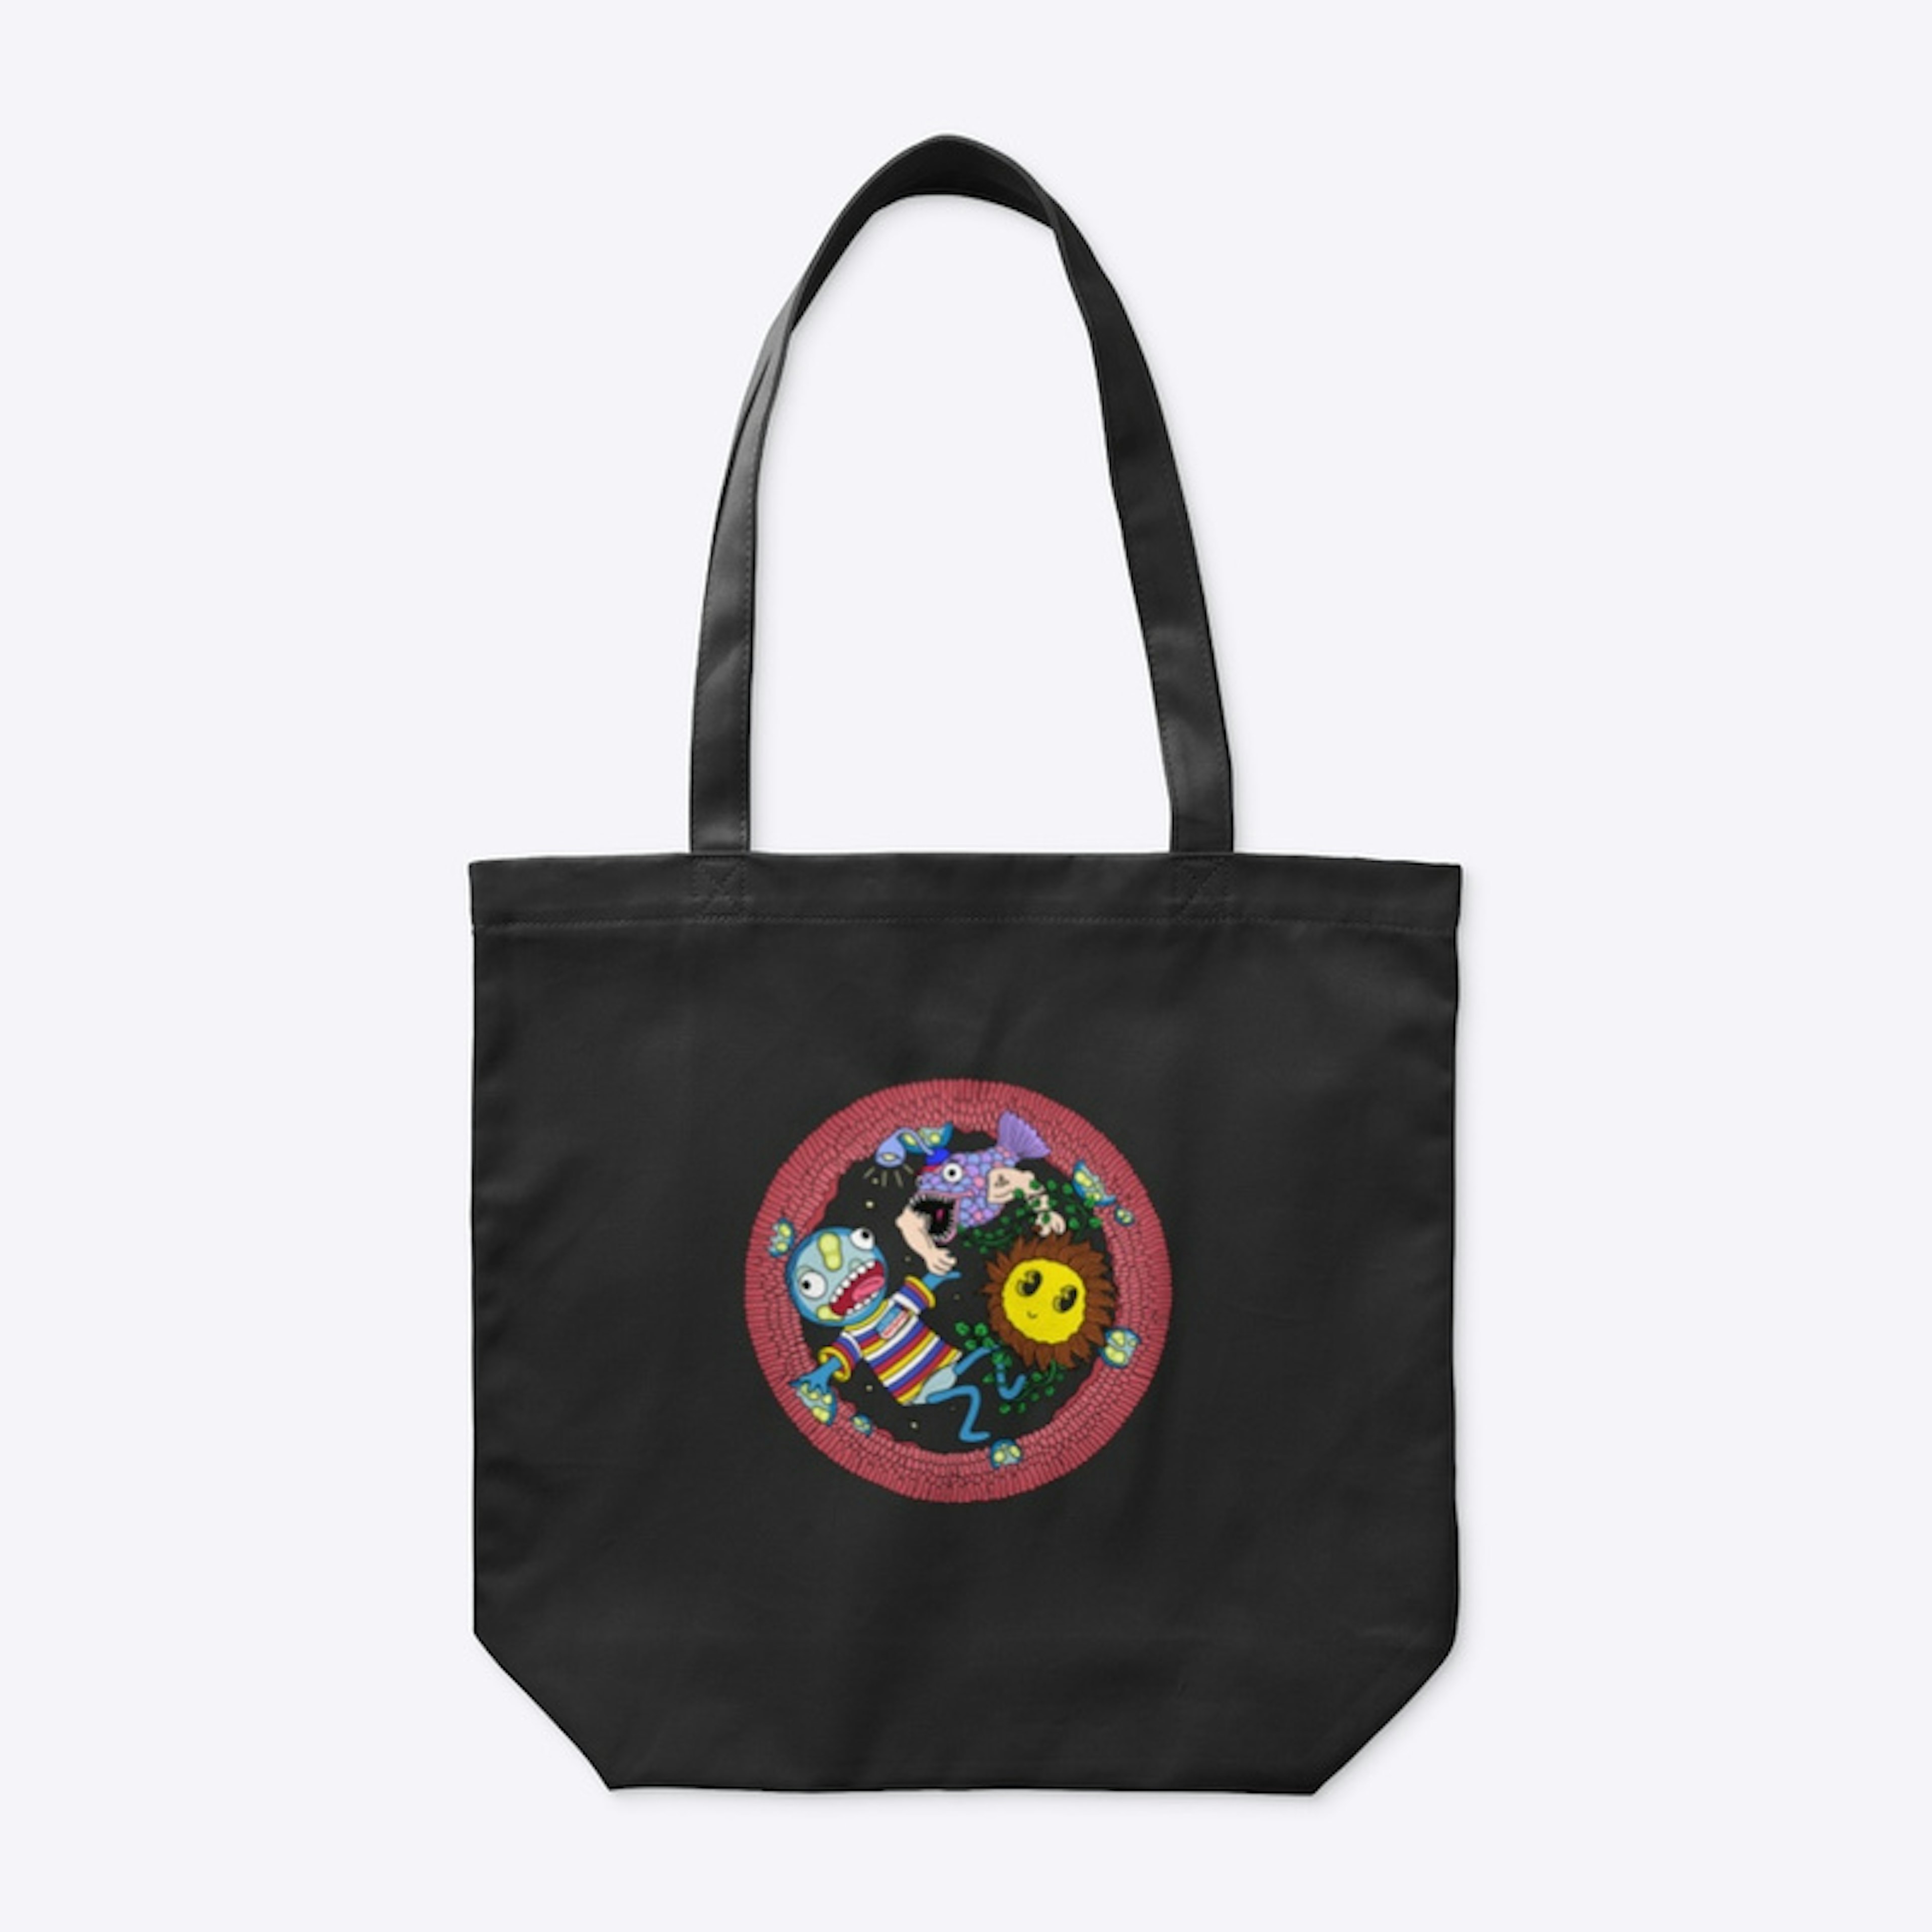 Space Friends tote bag